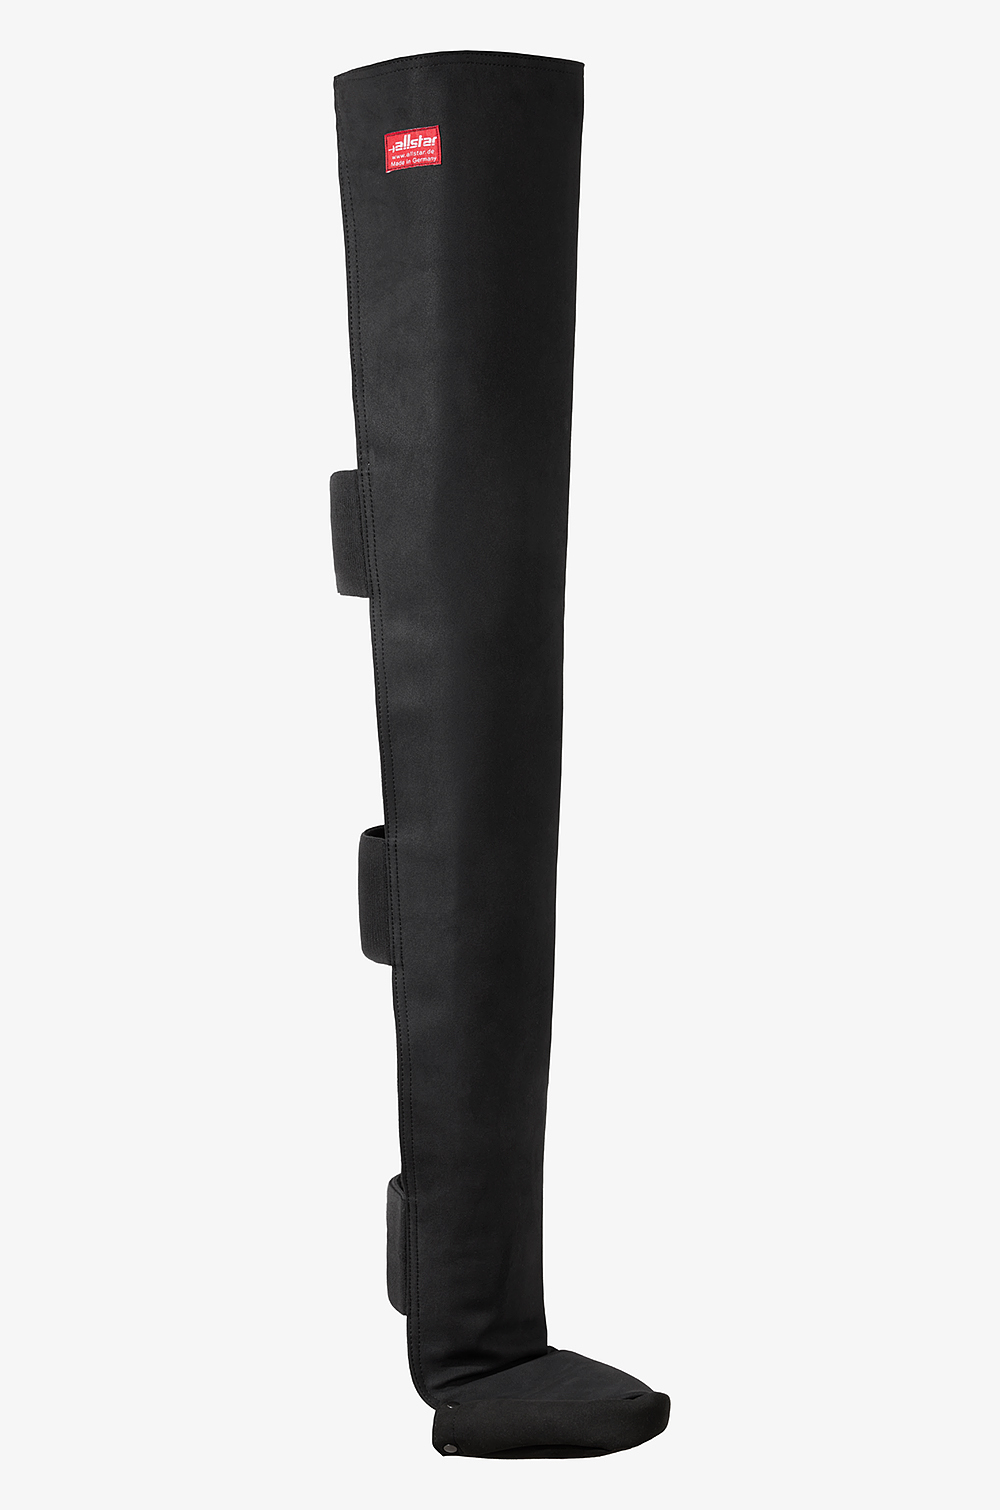 Alcantex-Leder Beinschutz mit Fußschutz